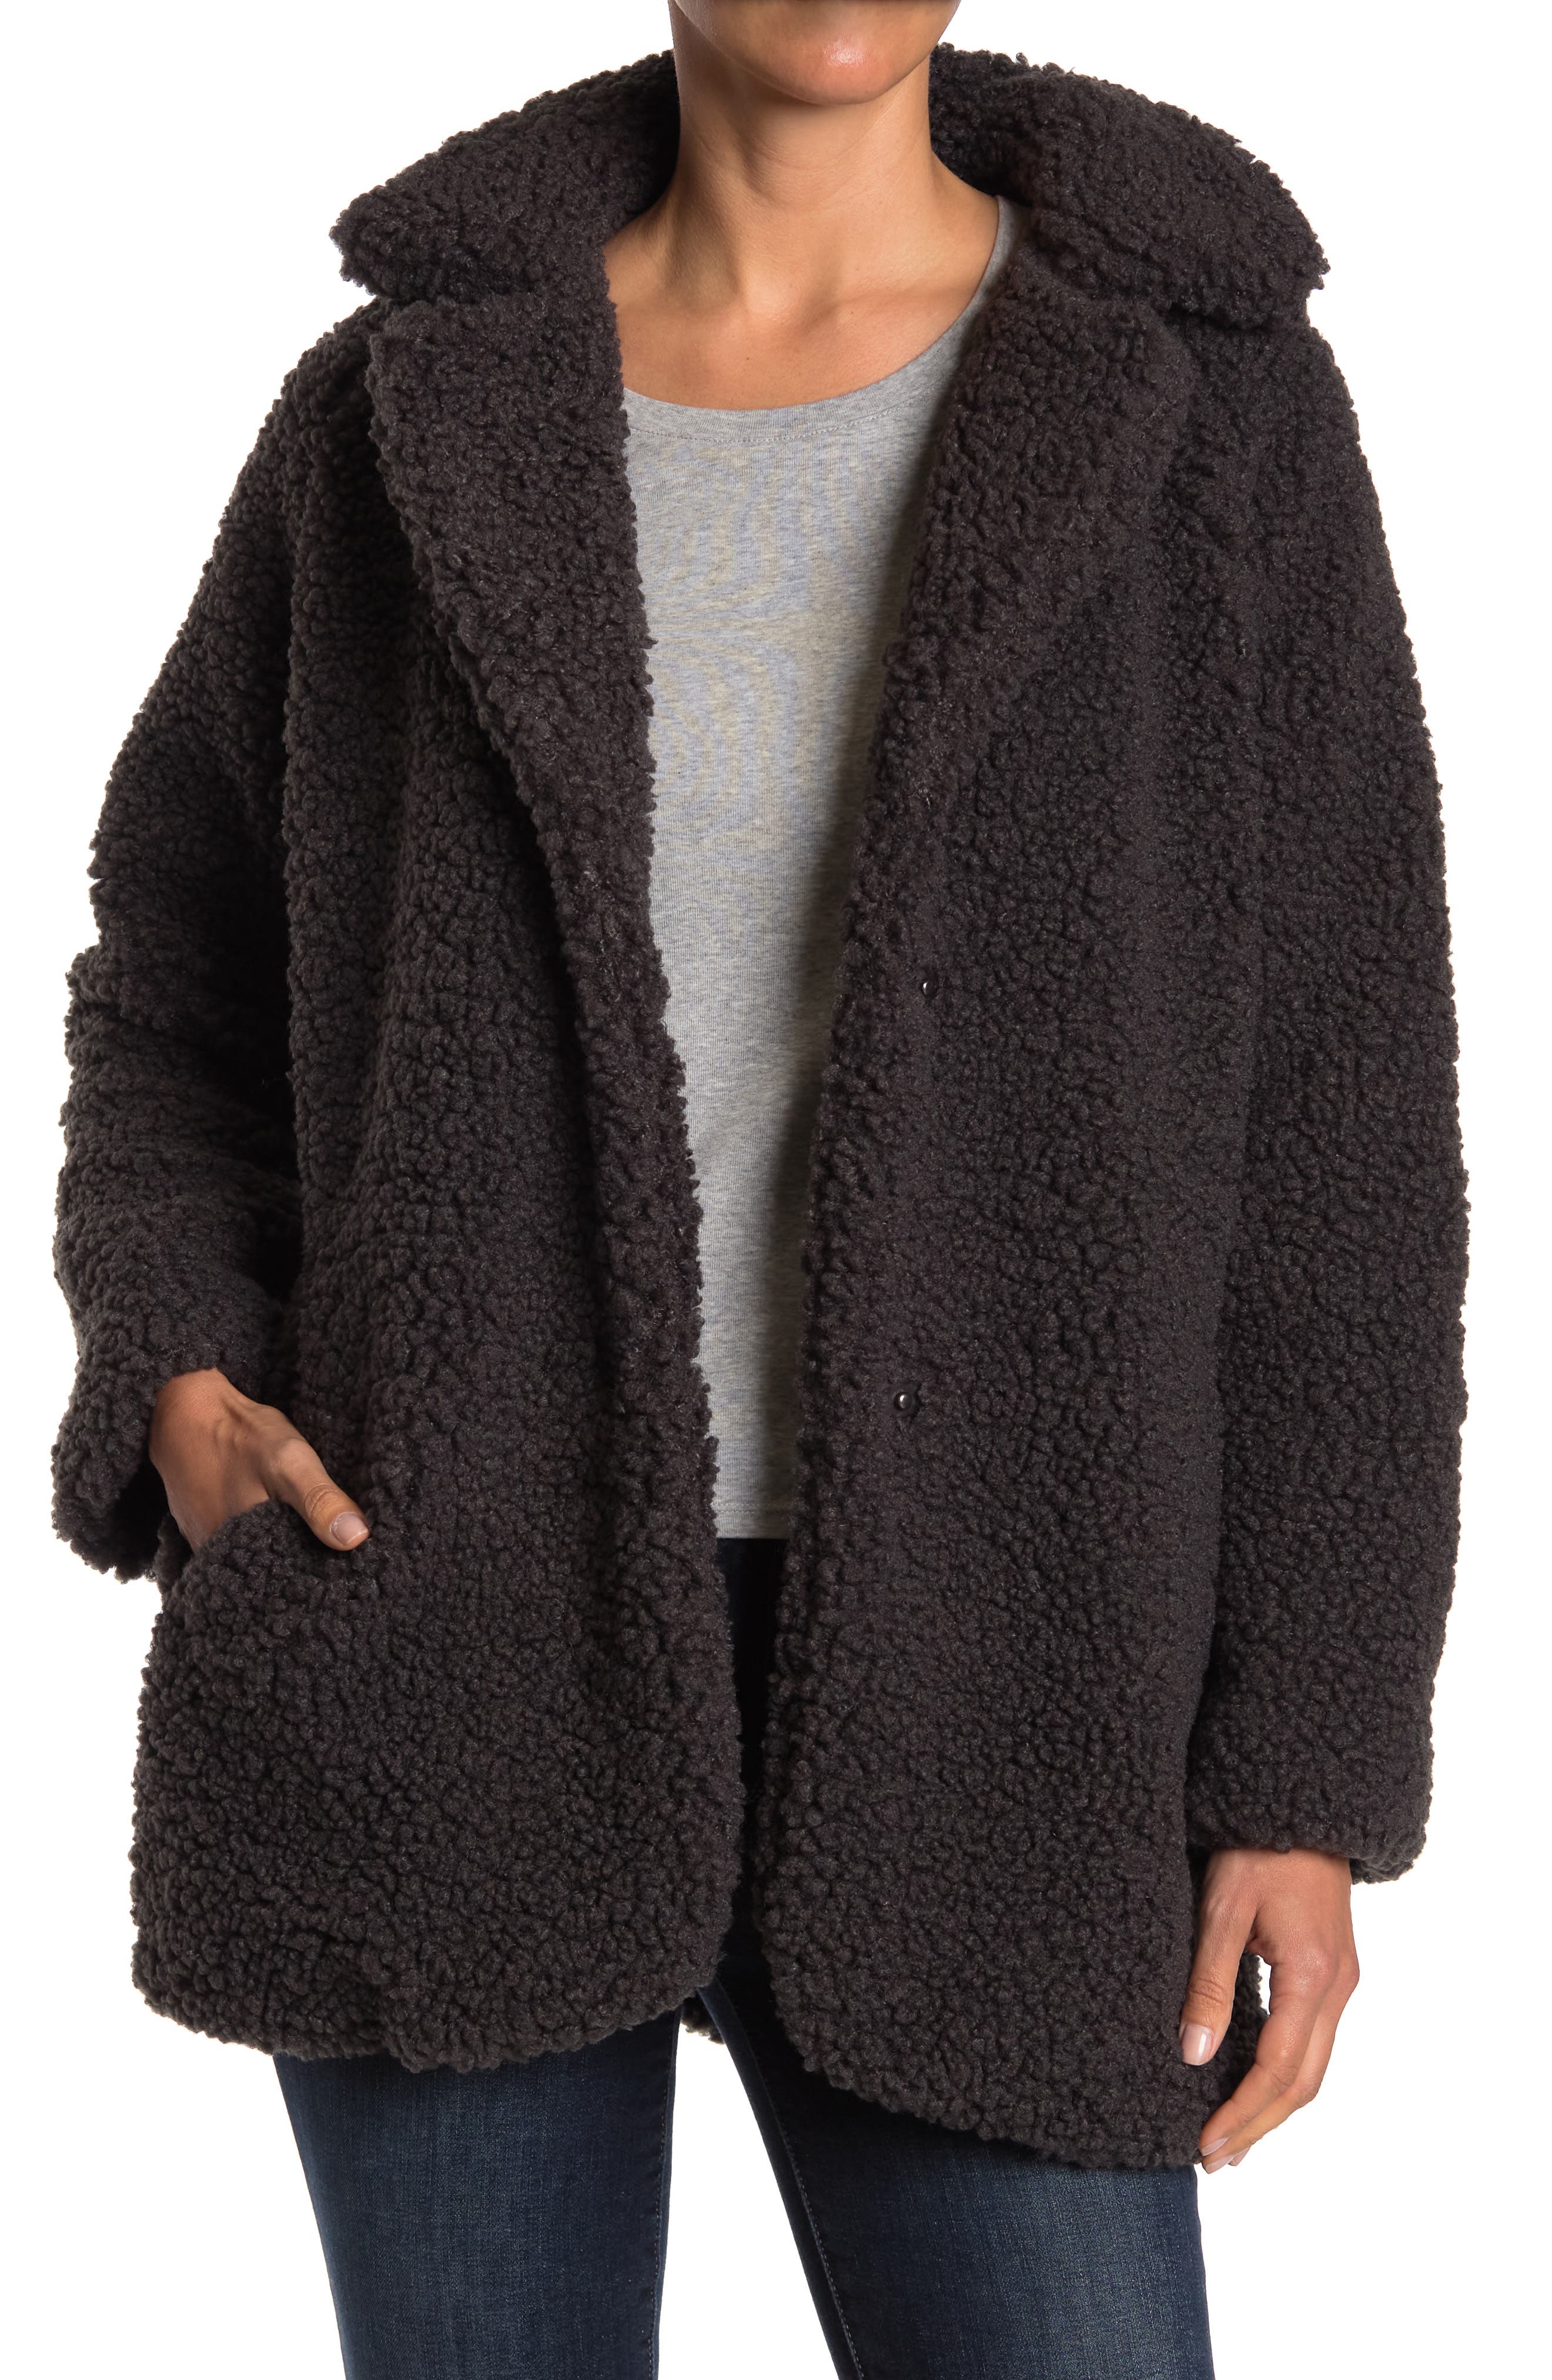 Girls Fuzzy Arctics Coats Fall Winter Warm Shearling Jackets Zip Up Cardigans 4-16 T